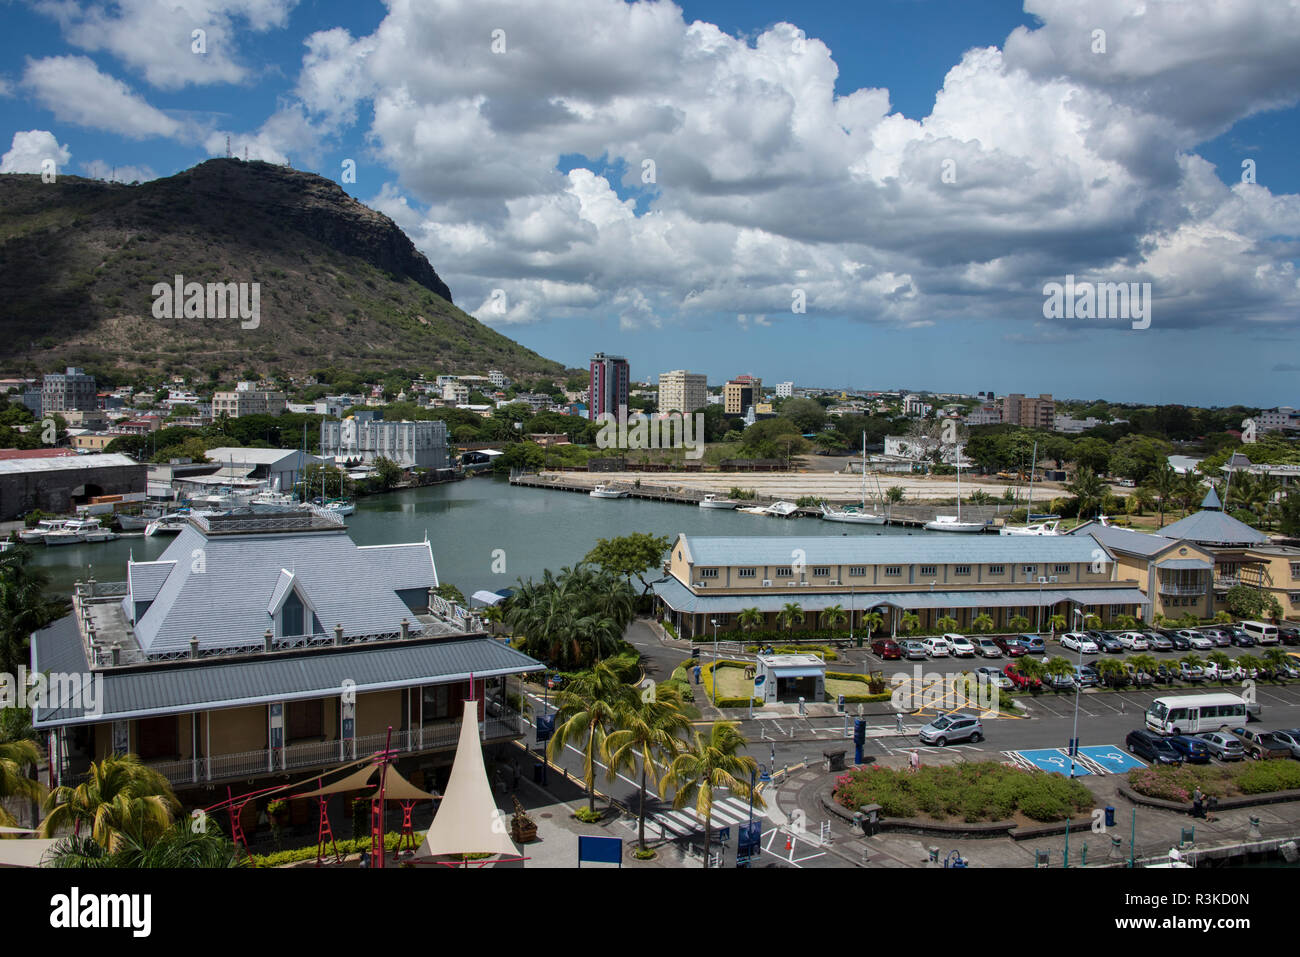 Mauritius, Capital city of Port Louis. Popular Le Caudan waterfront and harbor area. Stock Photo